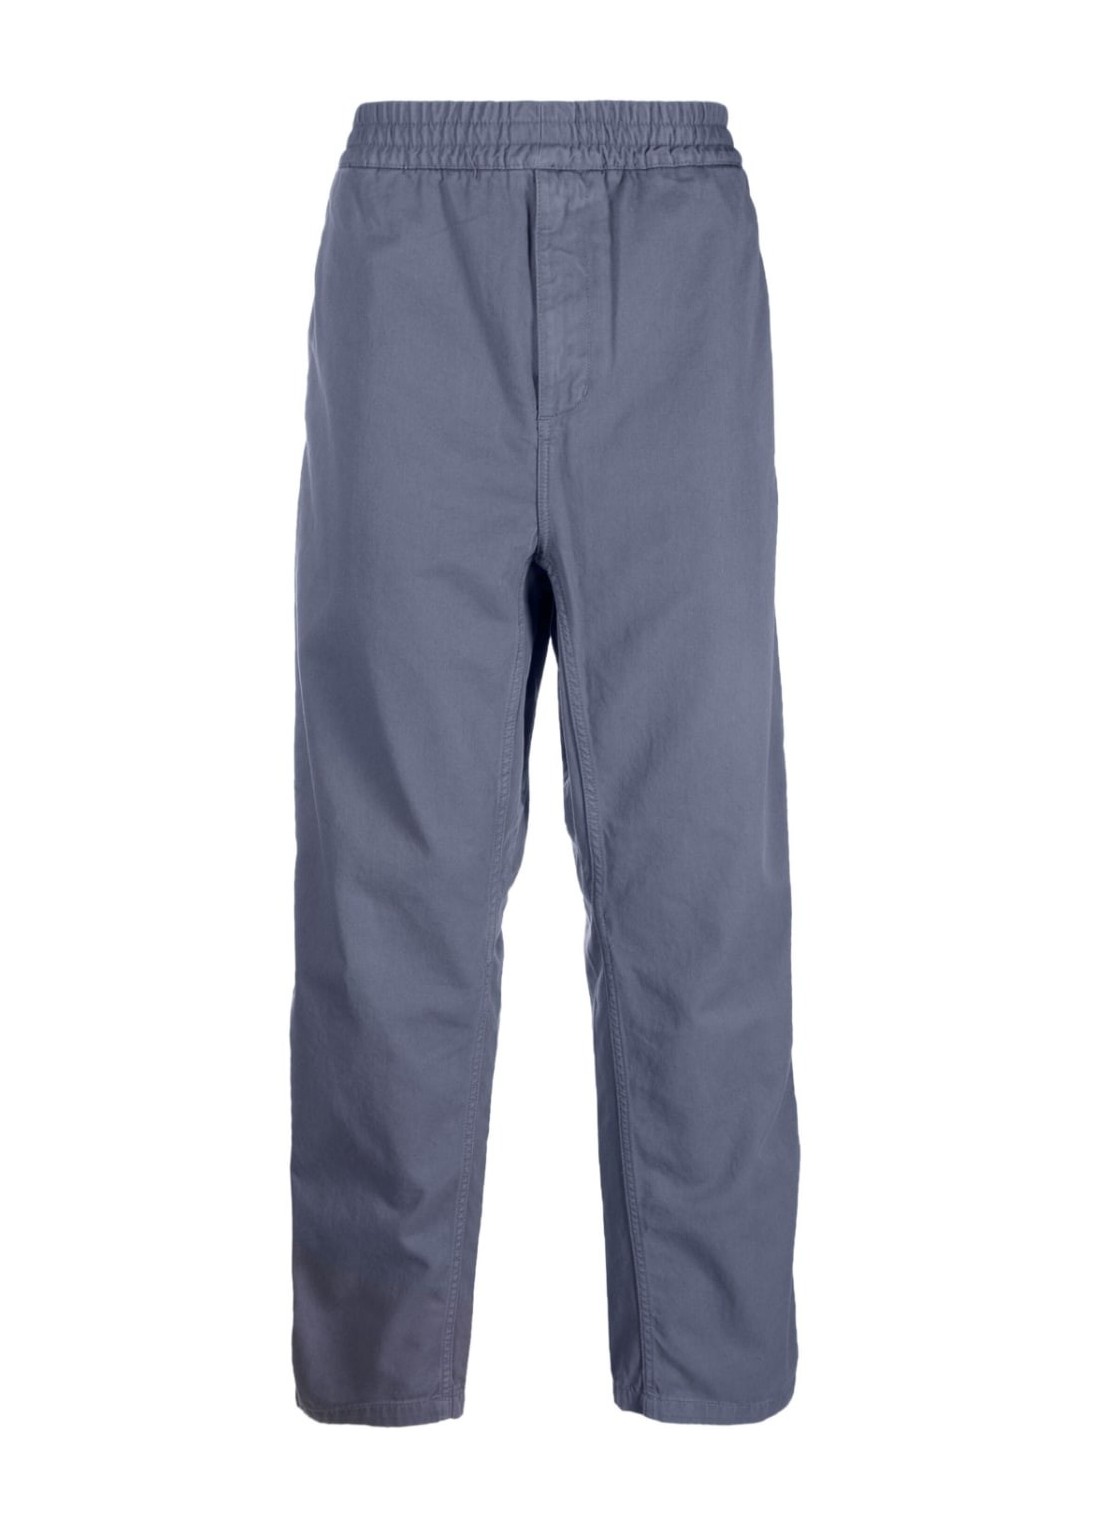 Pantalon carhartt flint pant - i029919 1cpgd talla XL
 